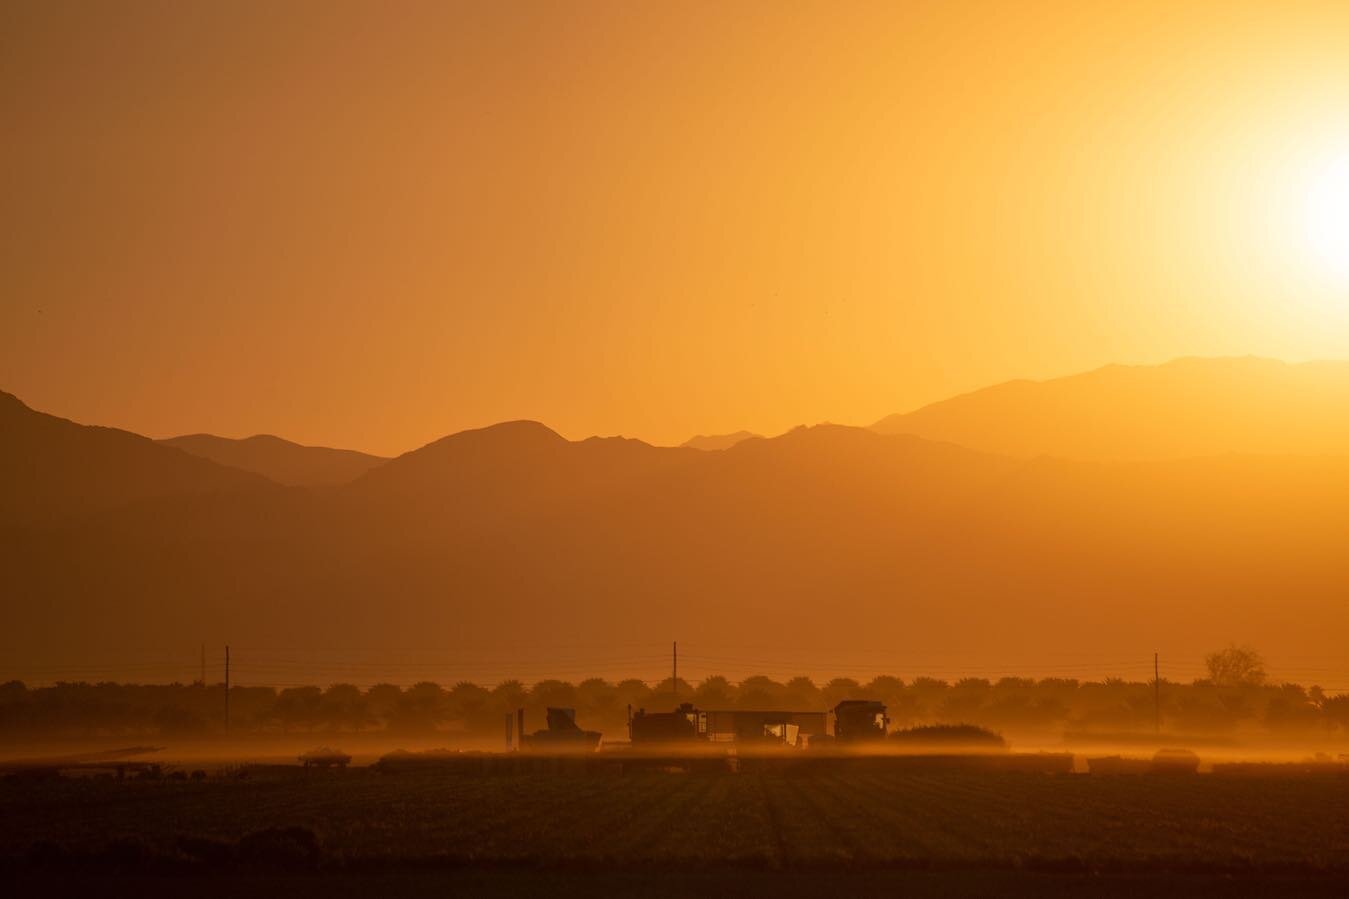 Sunrise on the farm was beautiful this morning. Happy Friday everybody! 
.
.
.
#goldenstateherbs #sunrise #farm #farmlife #mountains #californiafarmsandranches #culinaryherbs #airdried #californialove